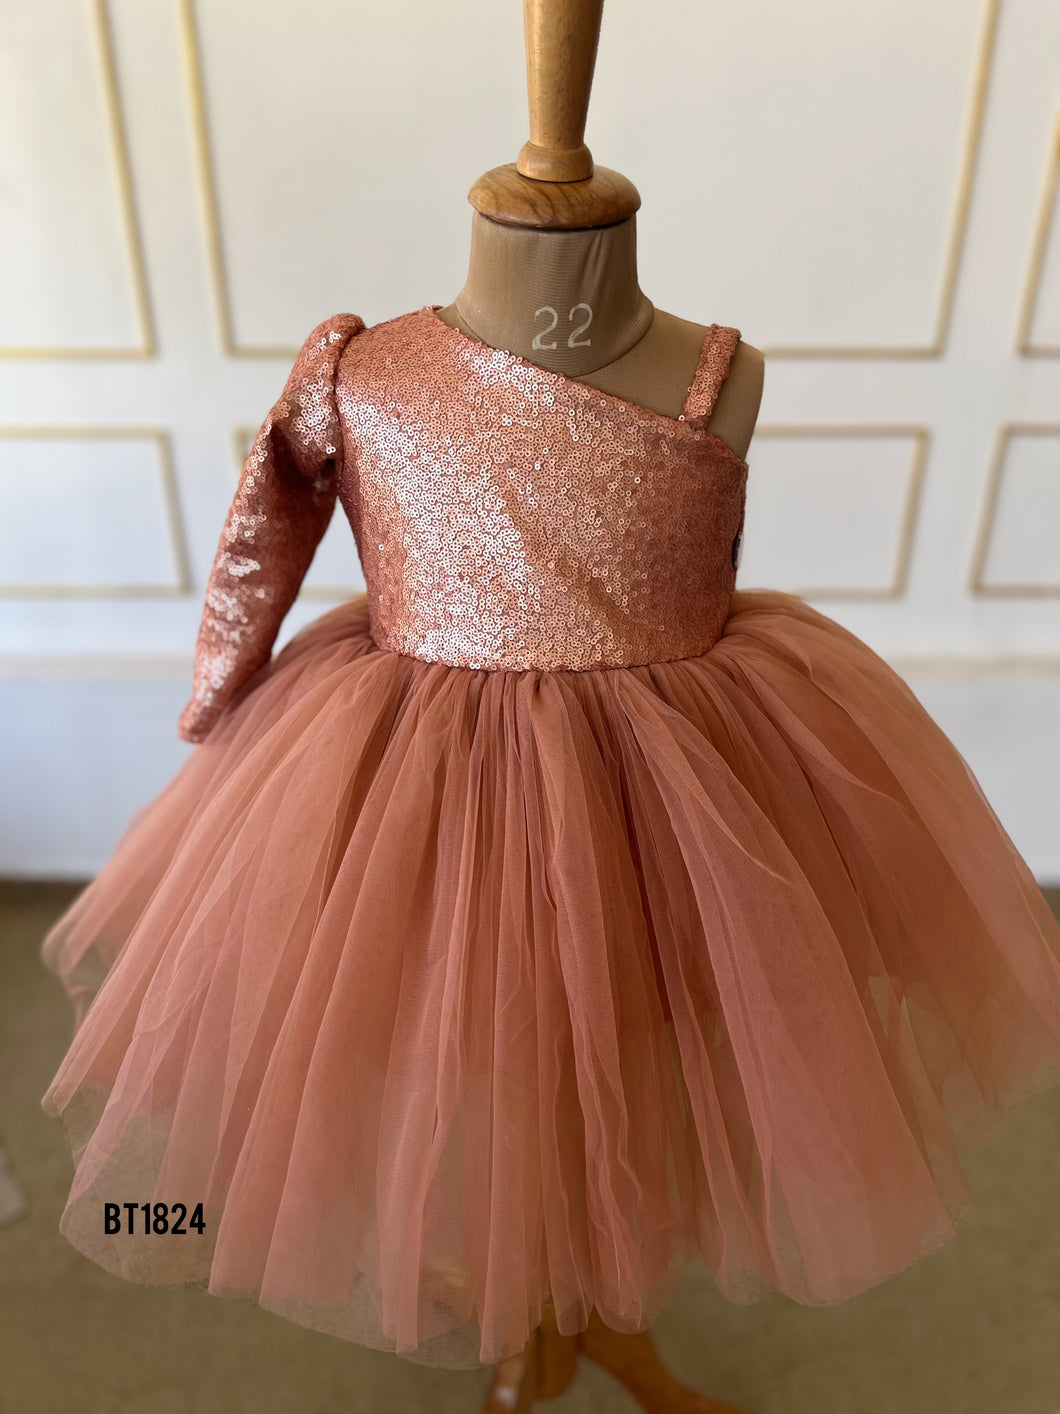 BT1824  Enchanting Peach Princess Dress - Make Every Moment Shine!